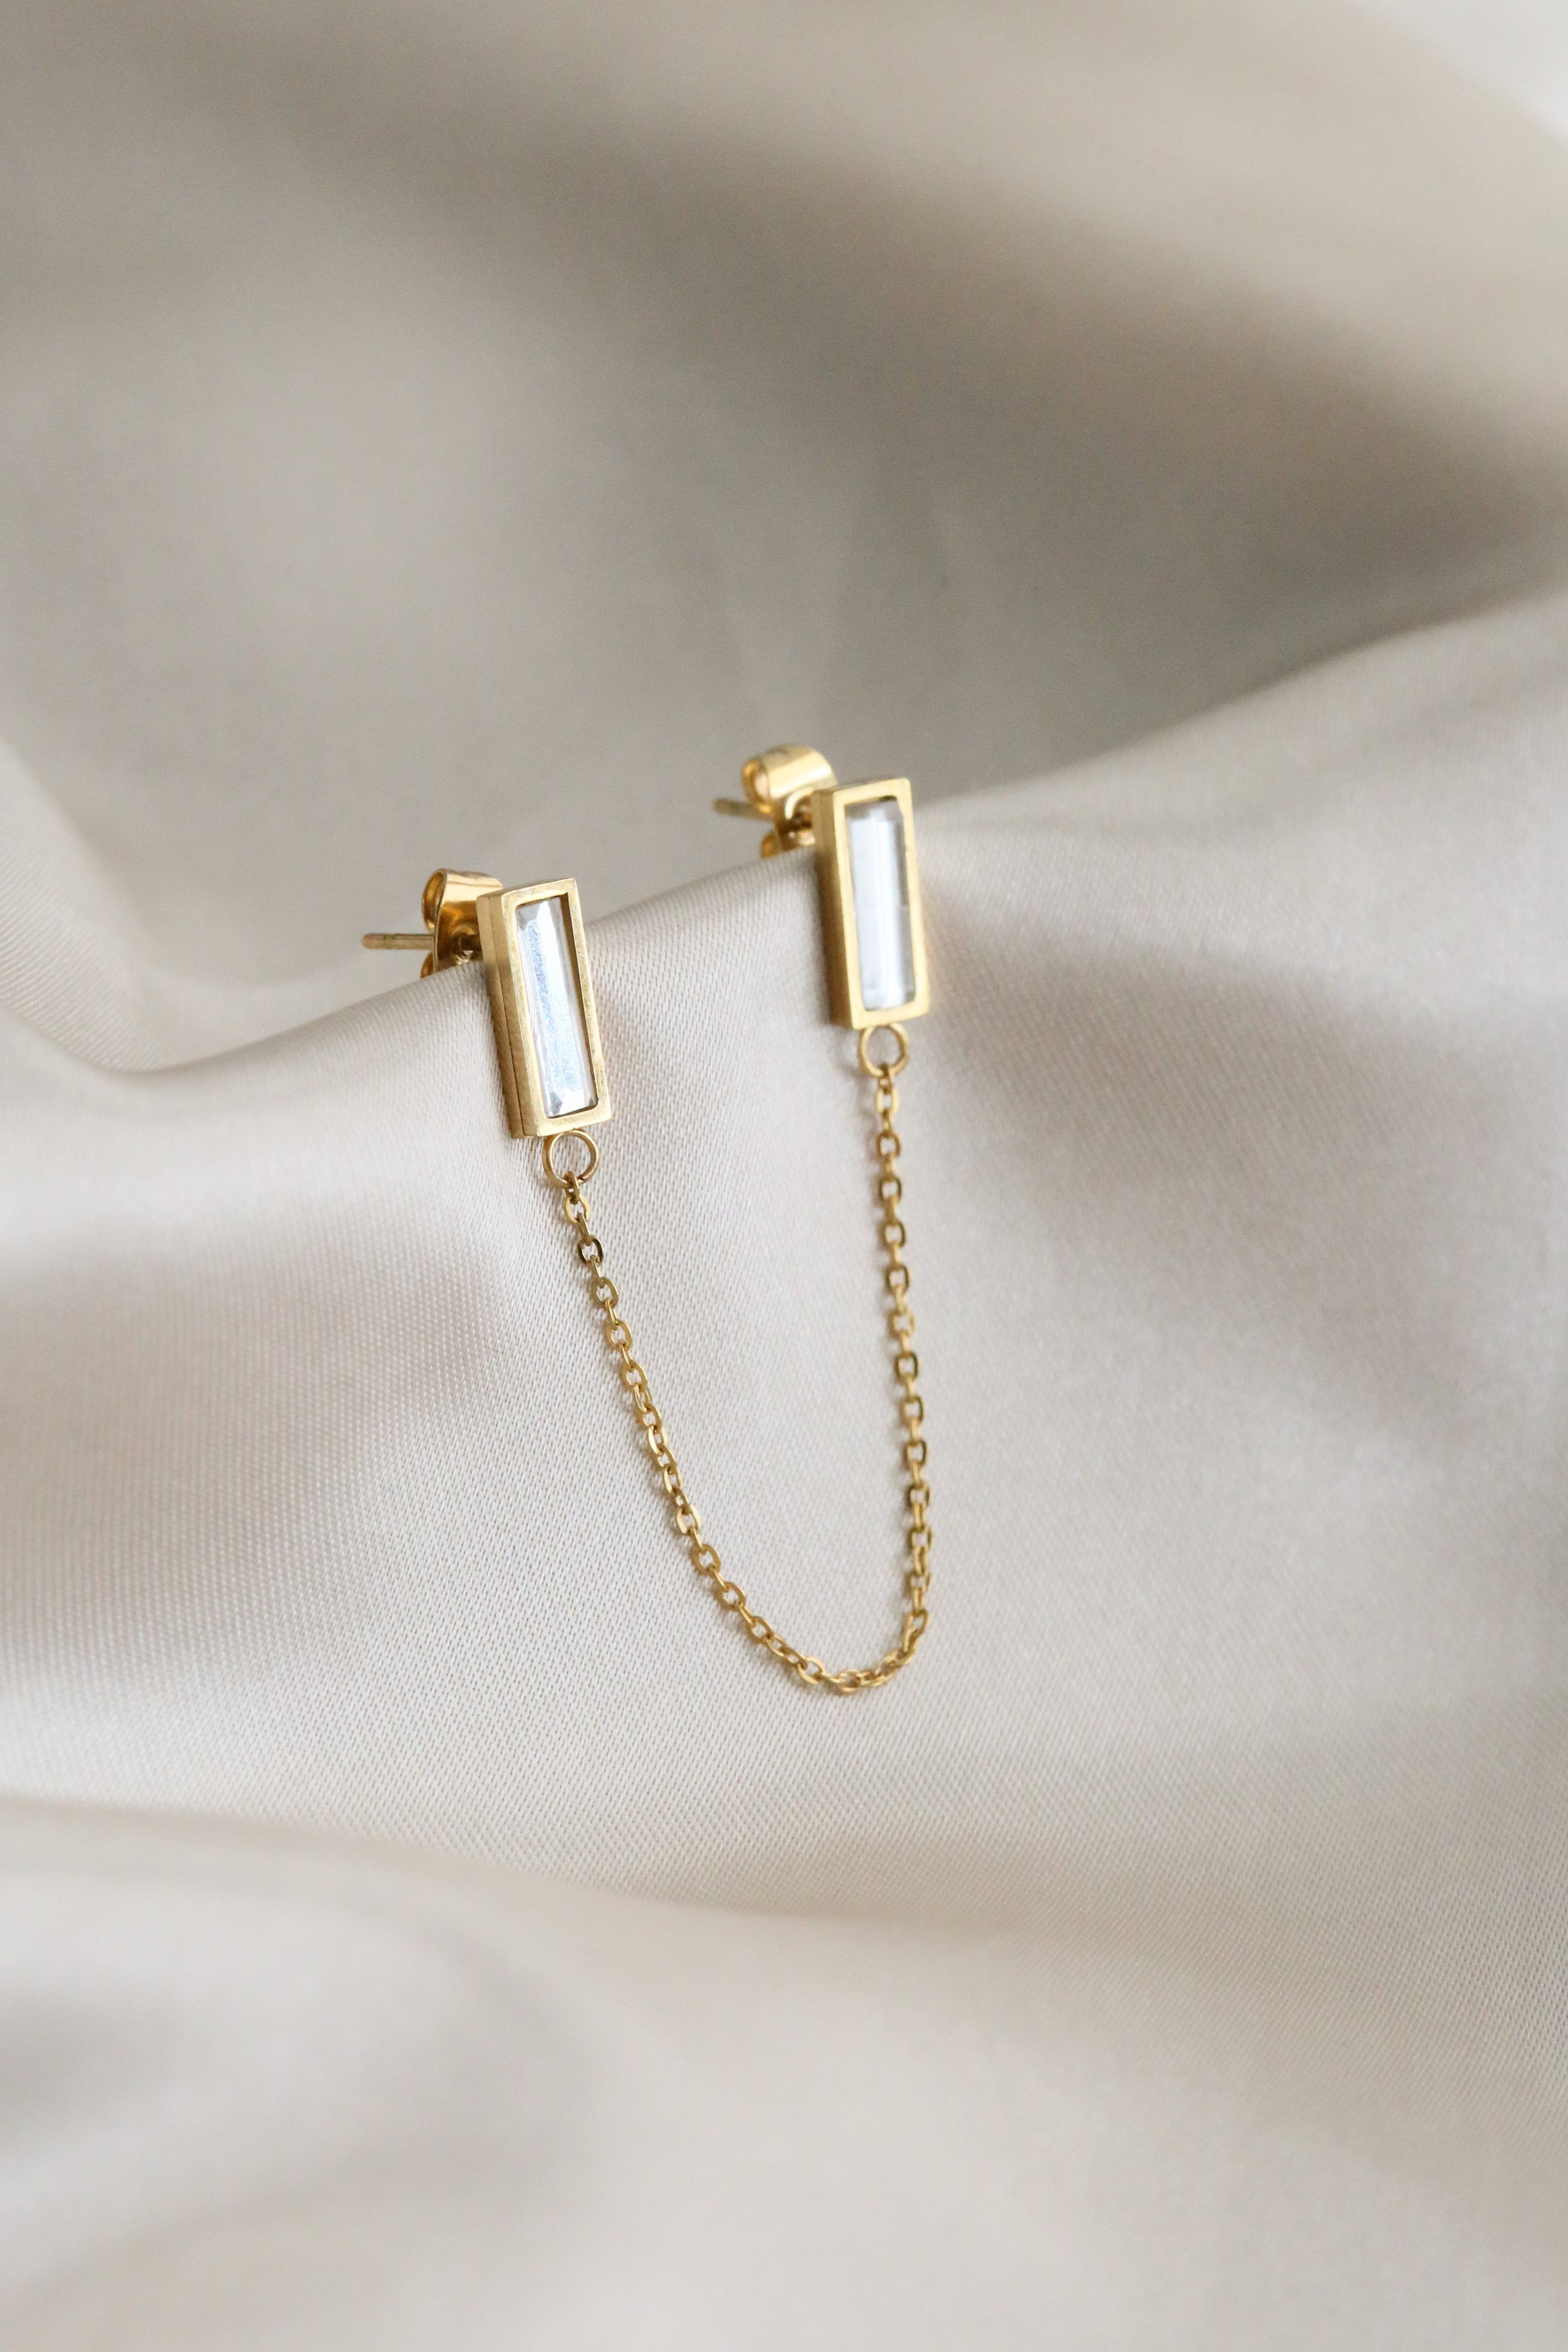 Parma Earrings - Boutique Minimaliste has waterproof, durable, elegant and vintage inspired jewelry